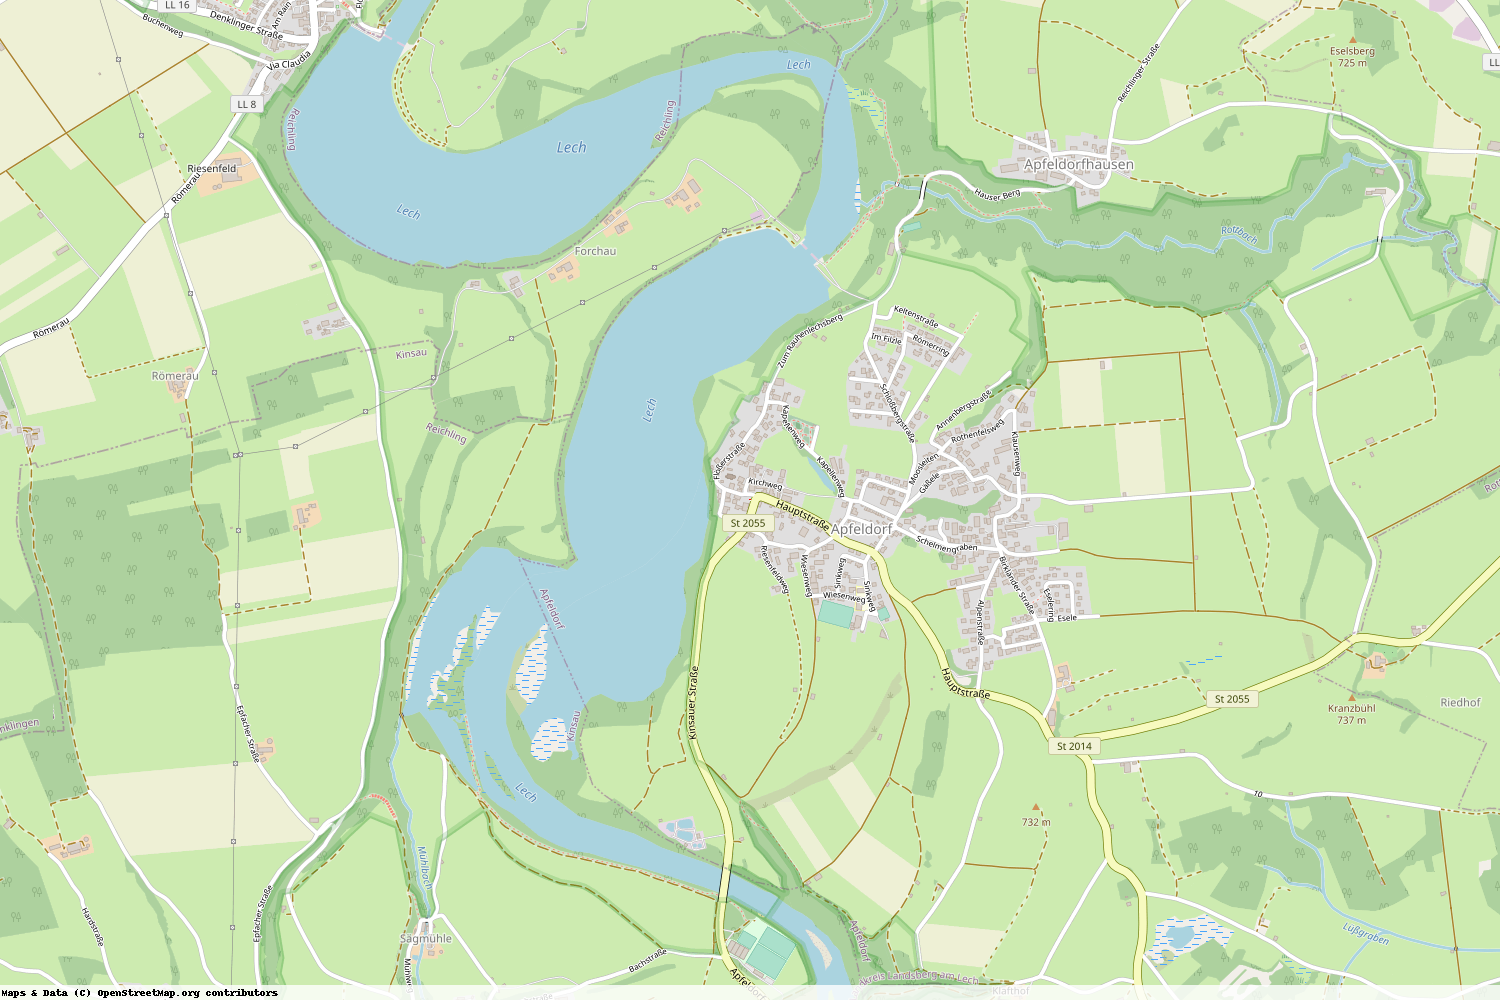 Ist gerade Stromausfall in Bayern - Landsberg am Lech - Apfeldorf?